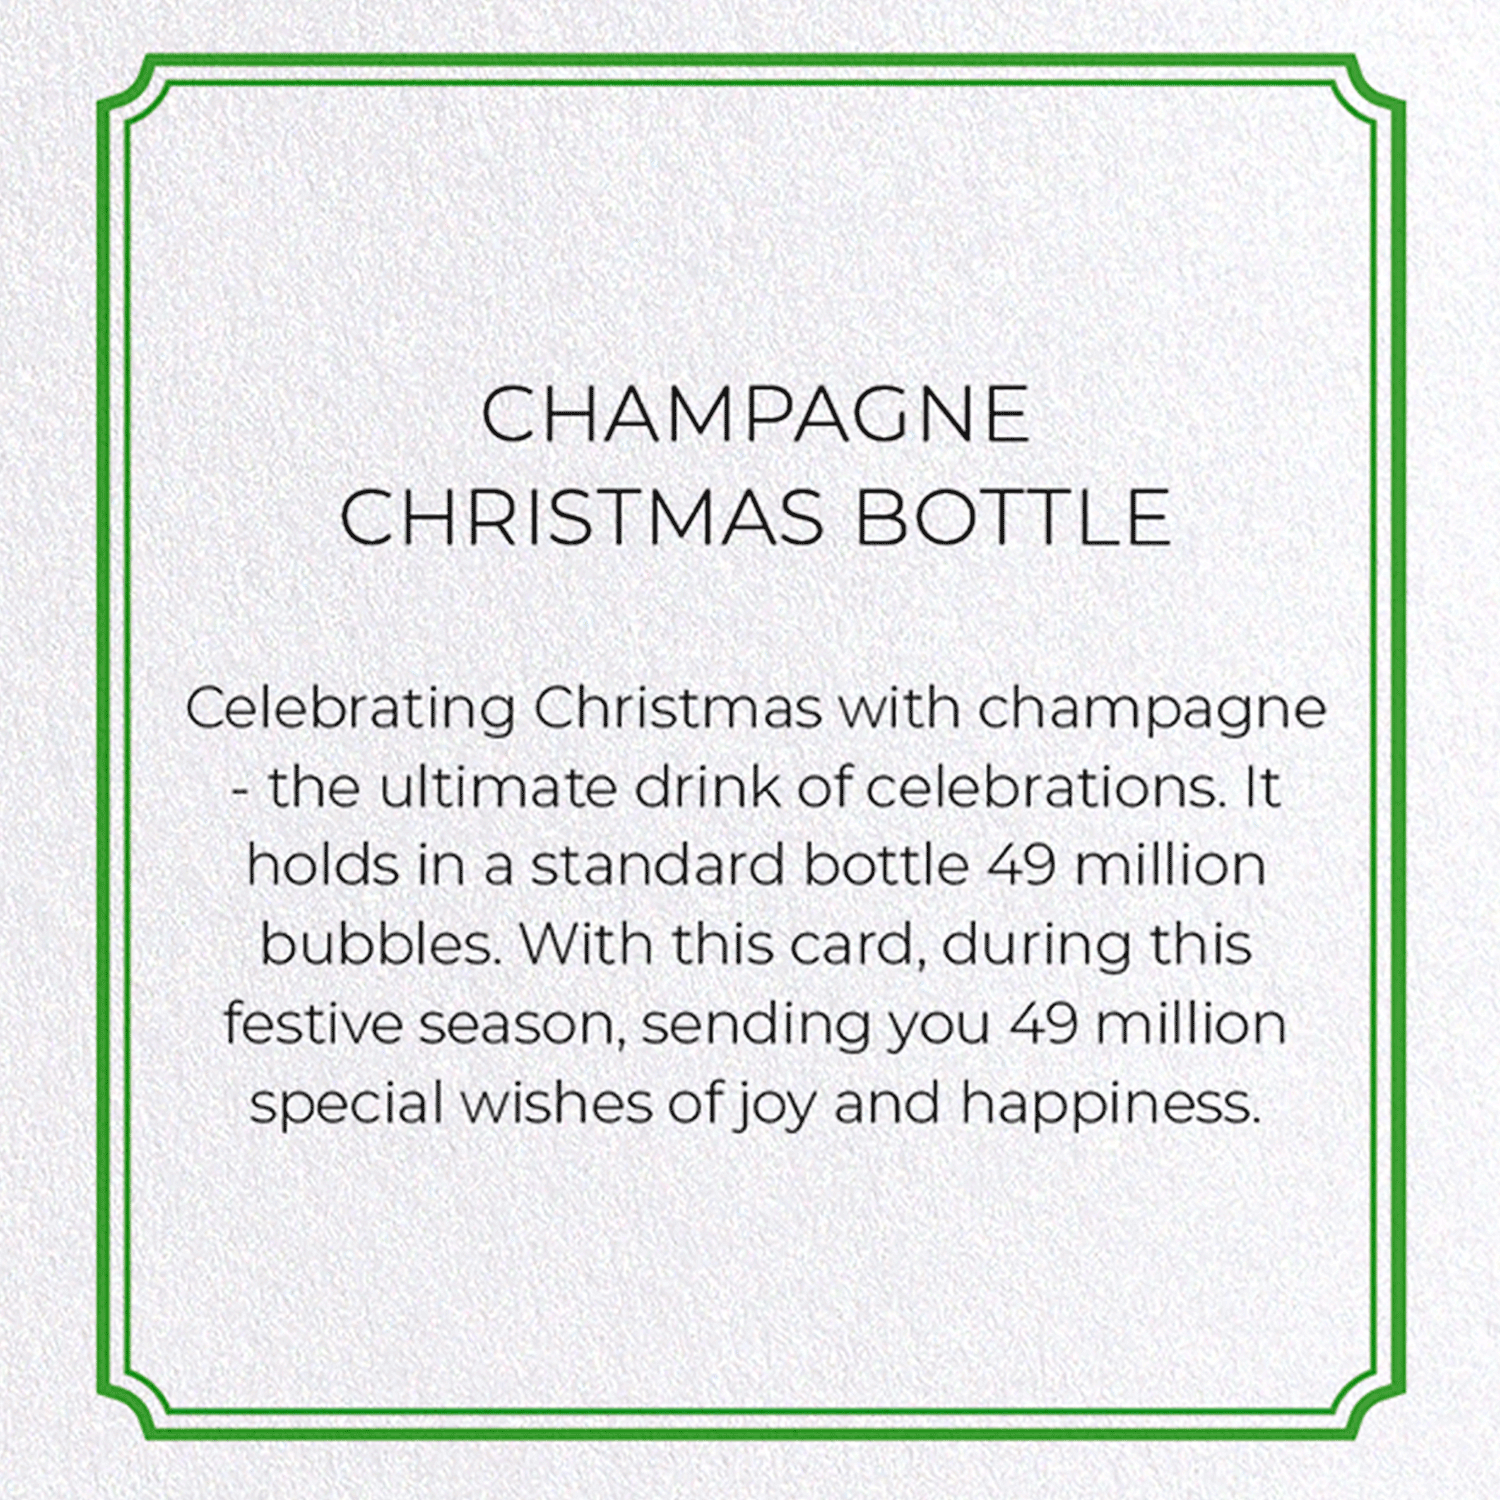 CHAMPAGNE CHRISTMAS BOTTLE: Vintage Greeting Card